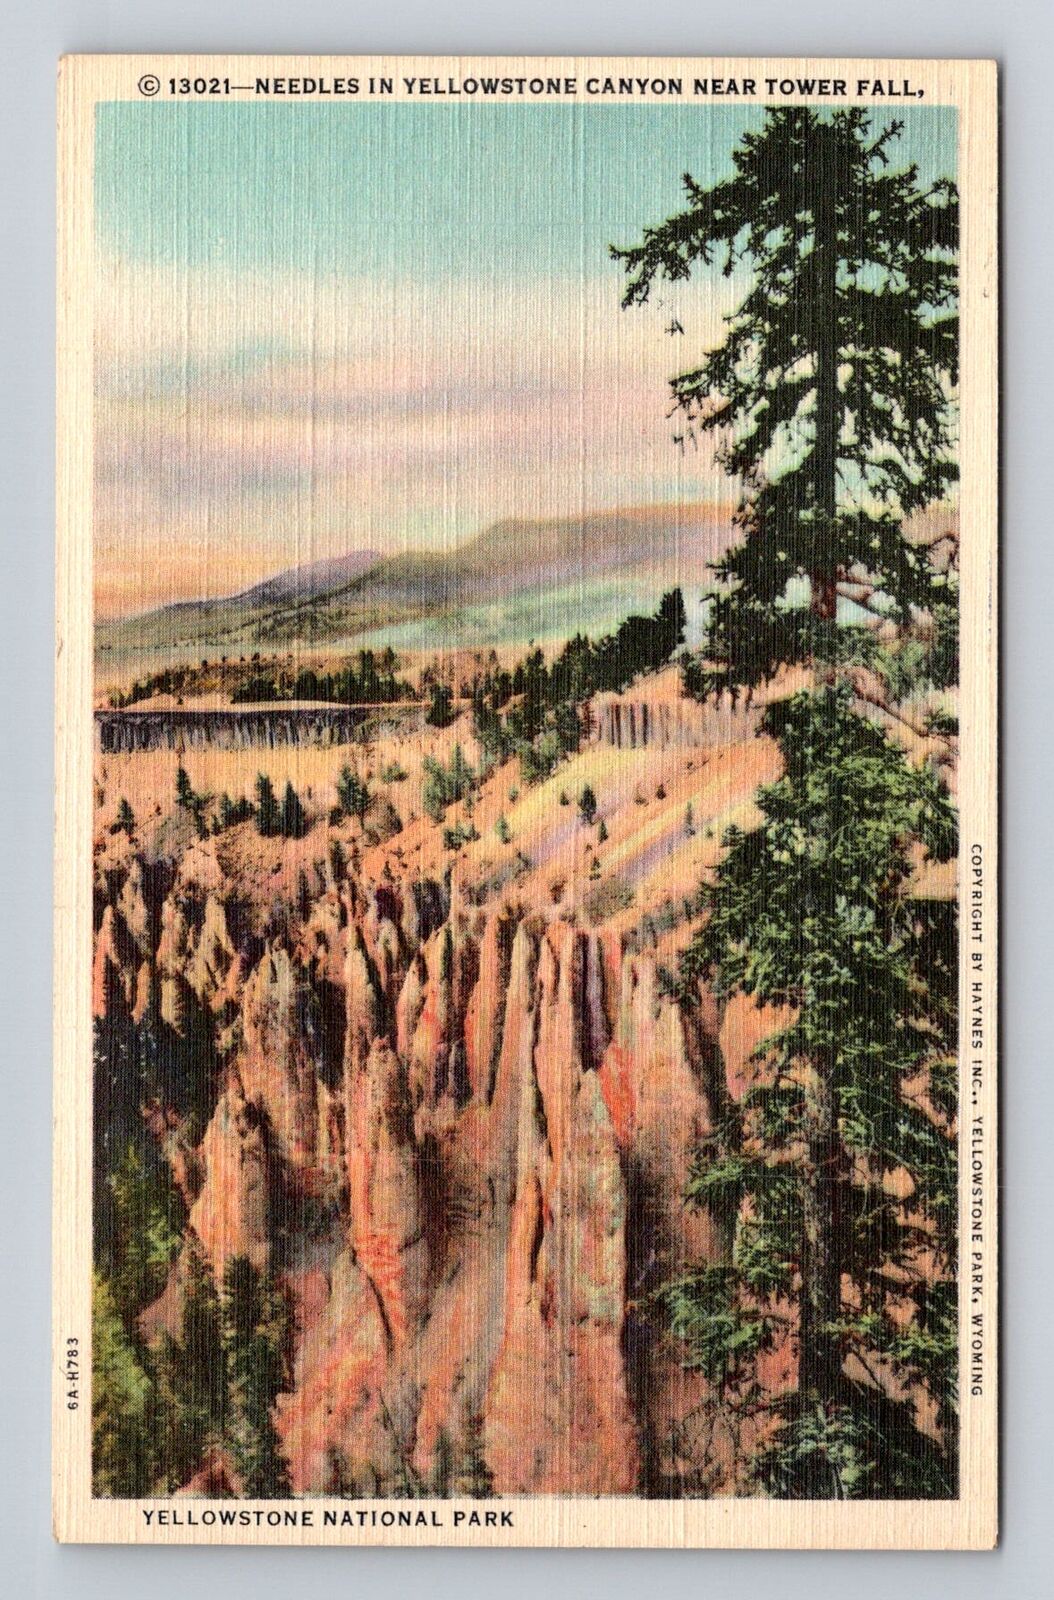 Yellowstone National Park, Needles, Series #13021 Vintage Souvenir Postcard